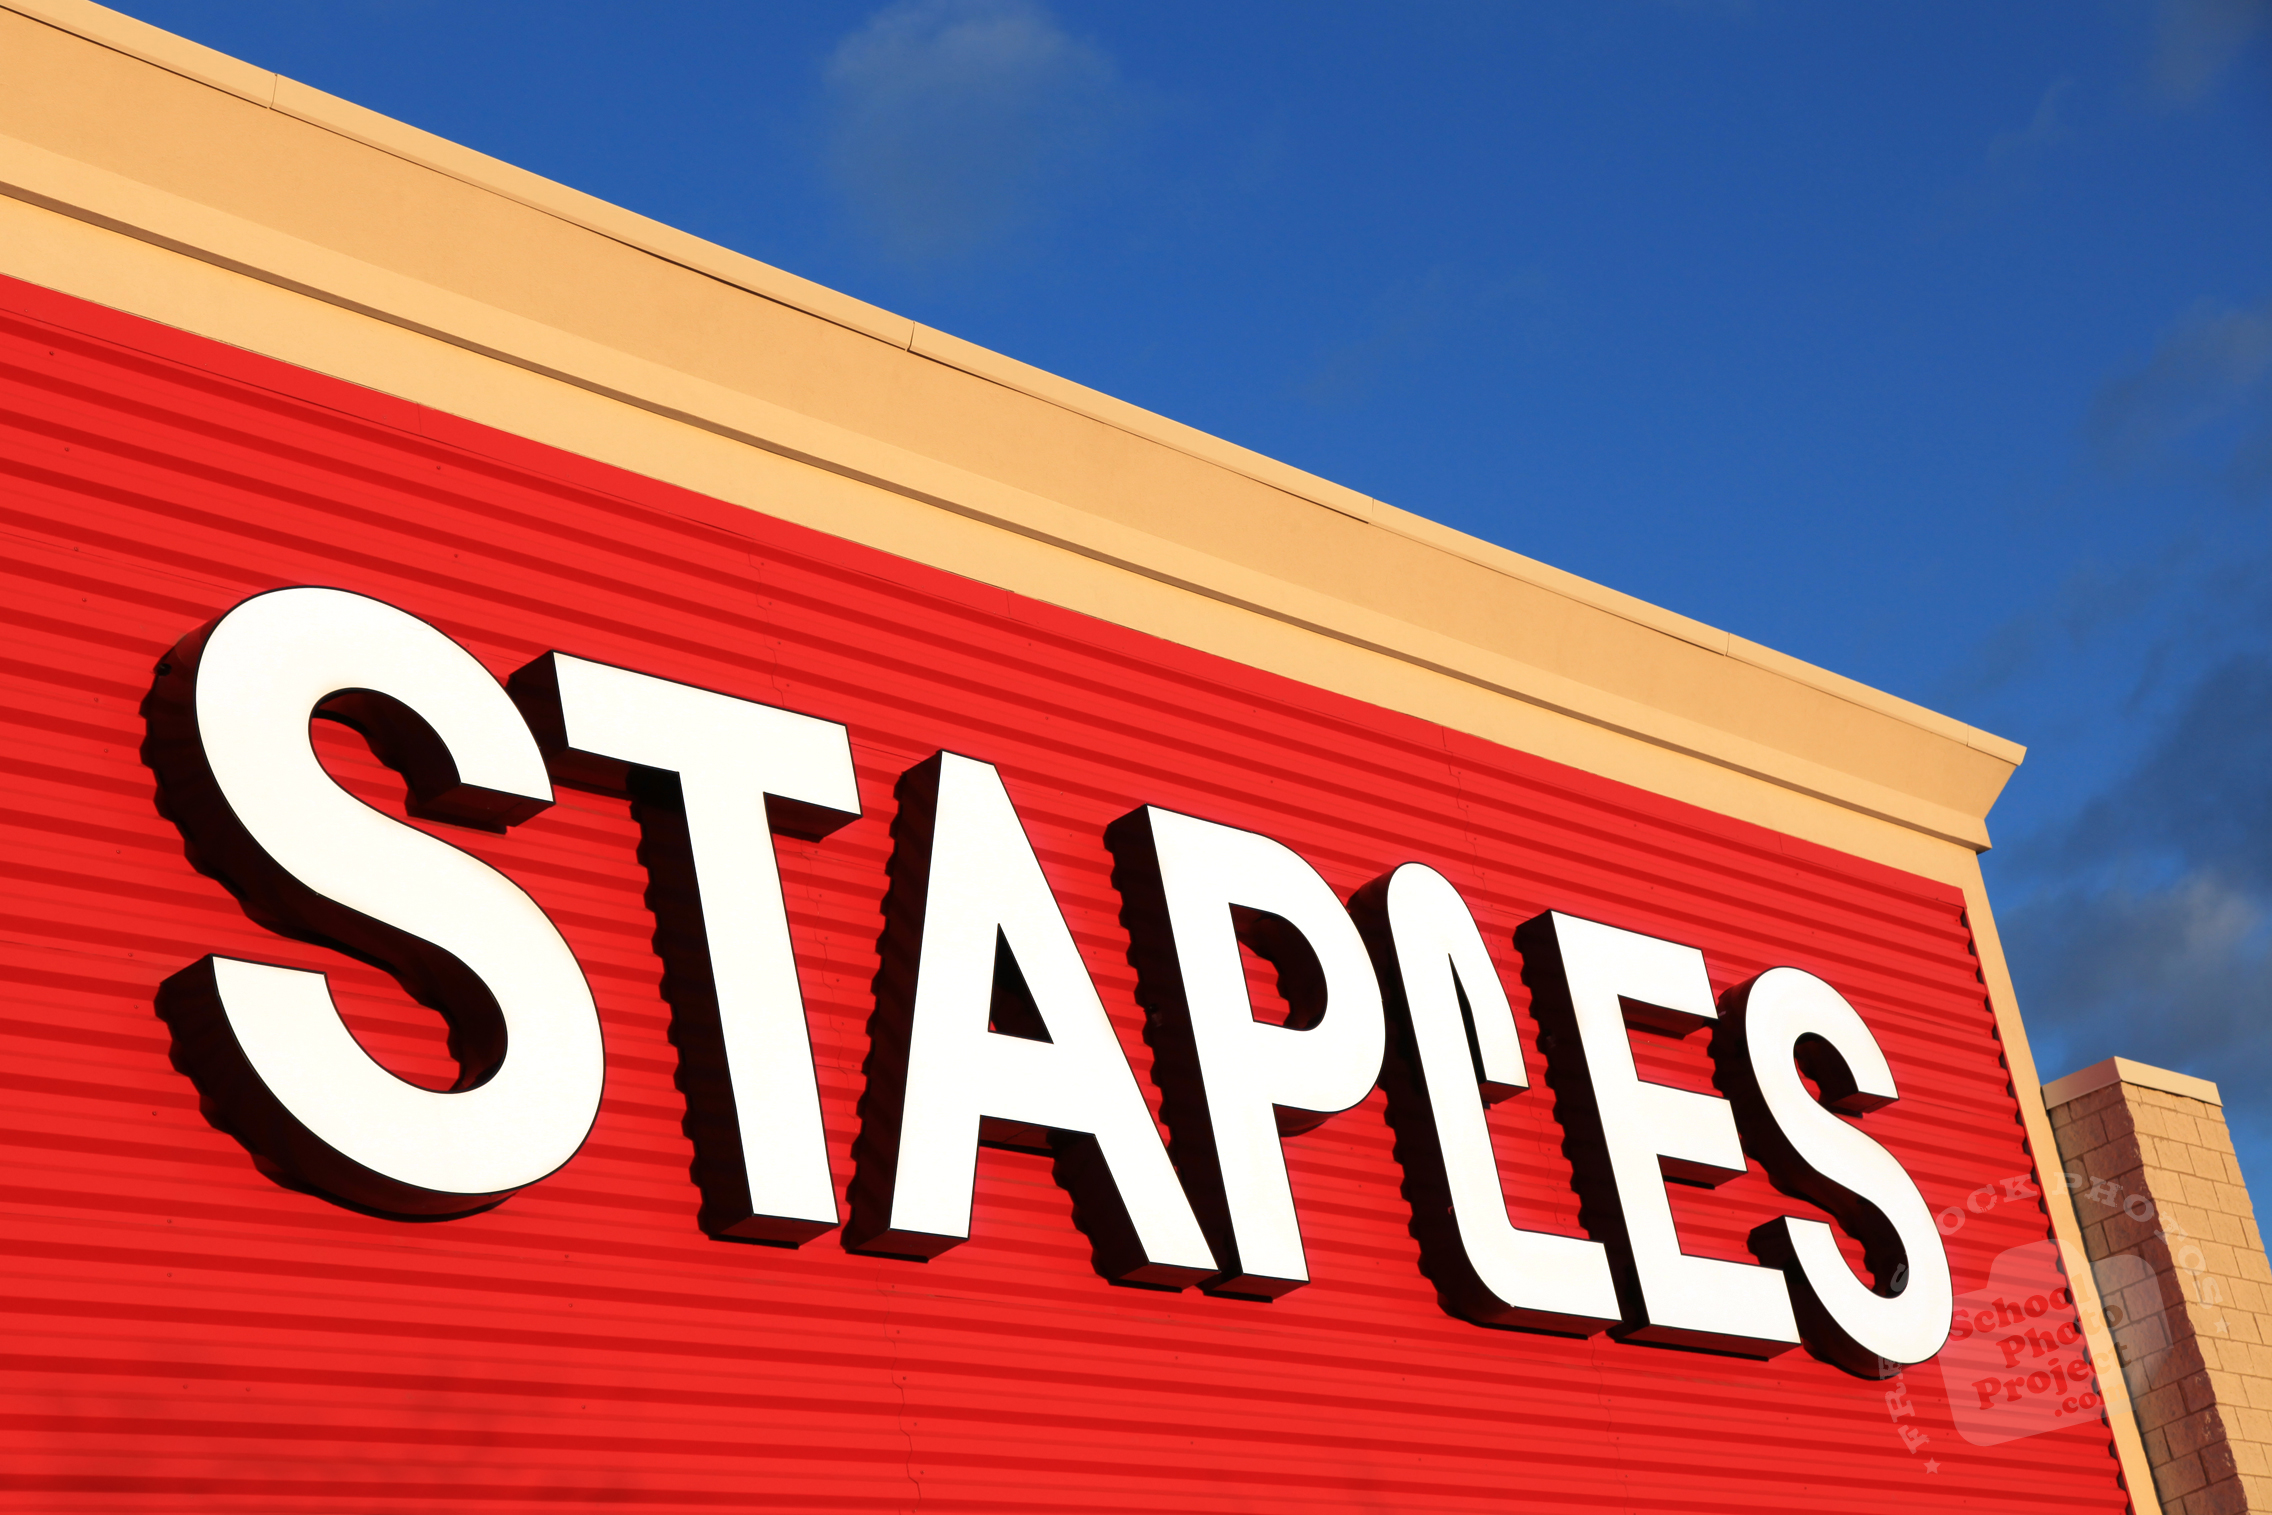 FREE Staples Logo, Staples Office Supply Identity, Popular ...